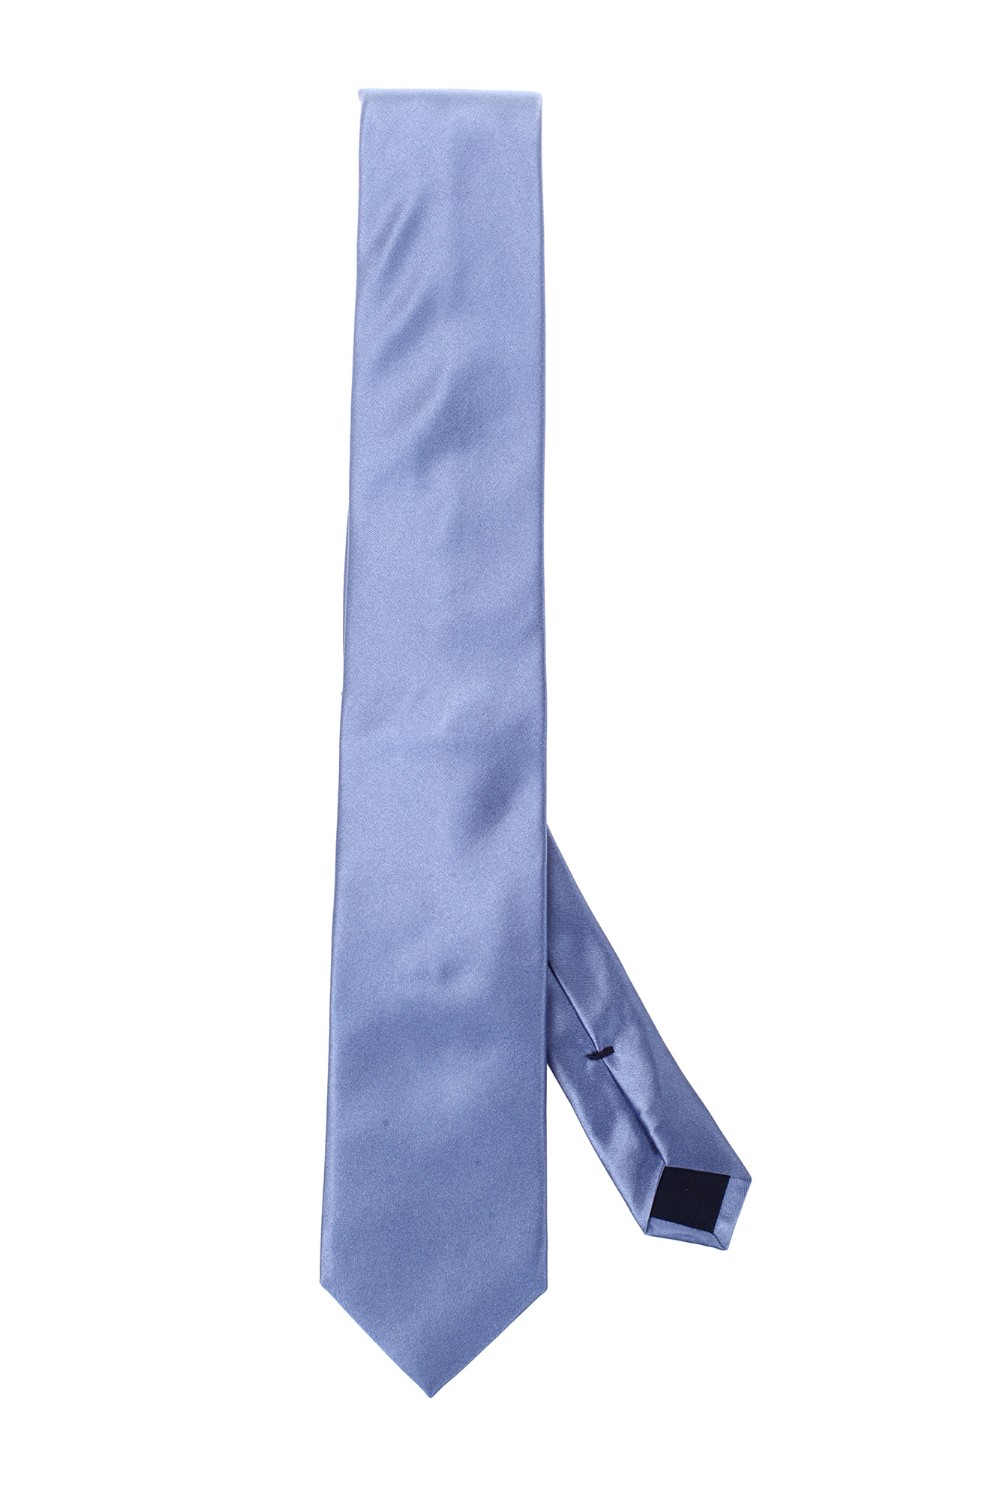 shop CORNELIANI  Cravatta: Corneliani cravatta in seta celeste.
Composizione: 100% seta.
Made in Italy.. 91U906 3120480-004 number 4338279